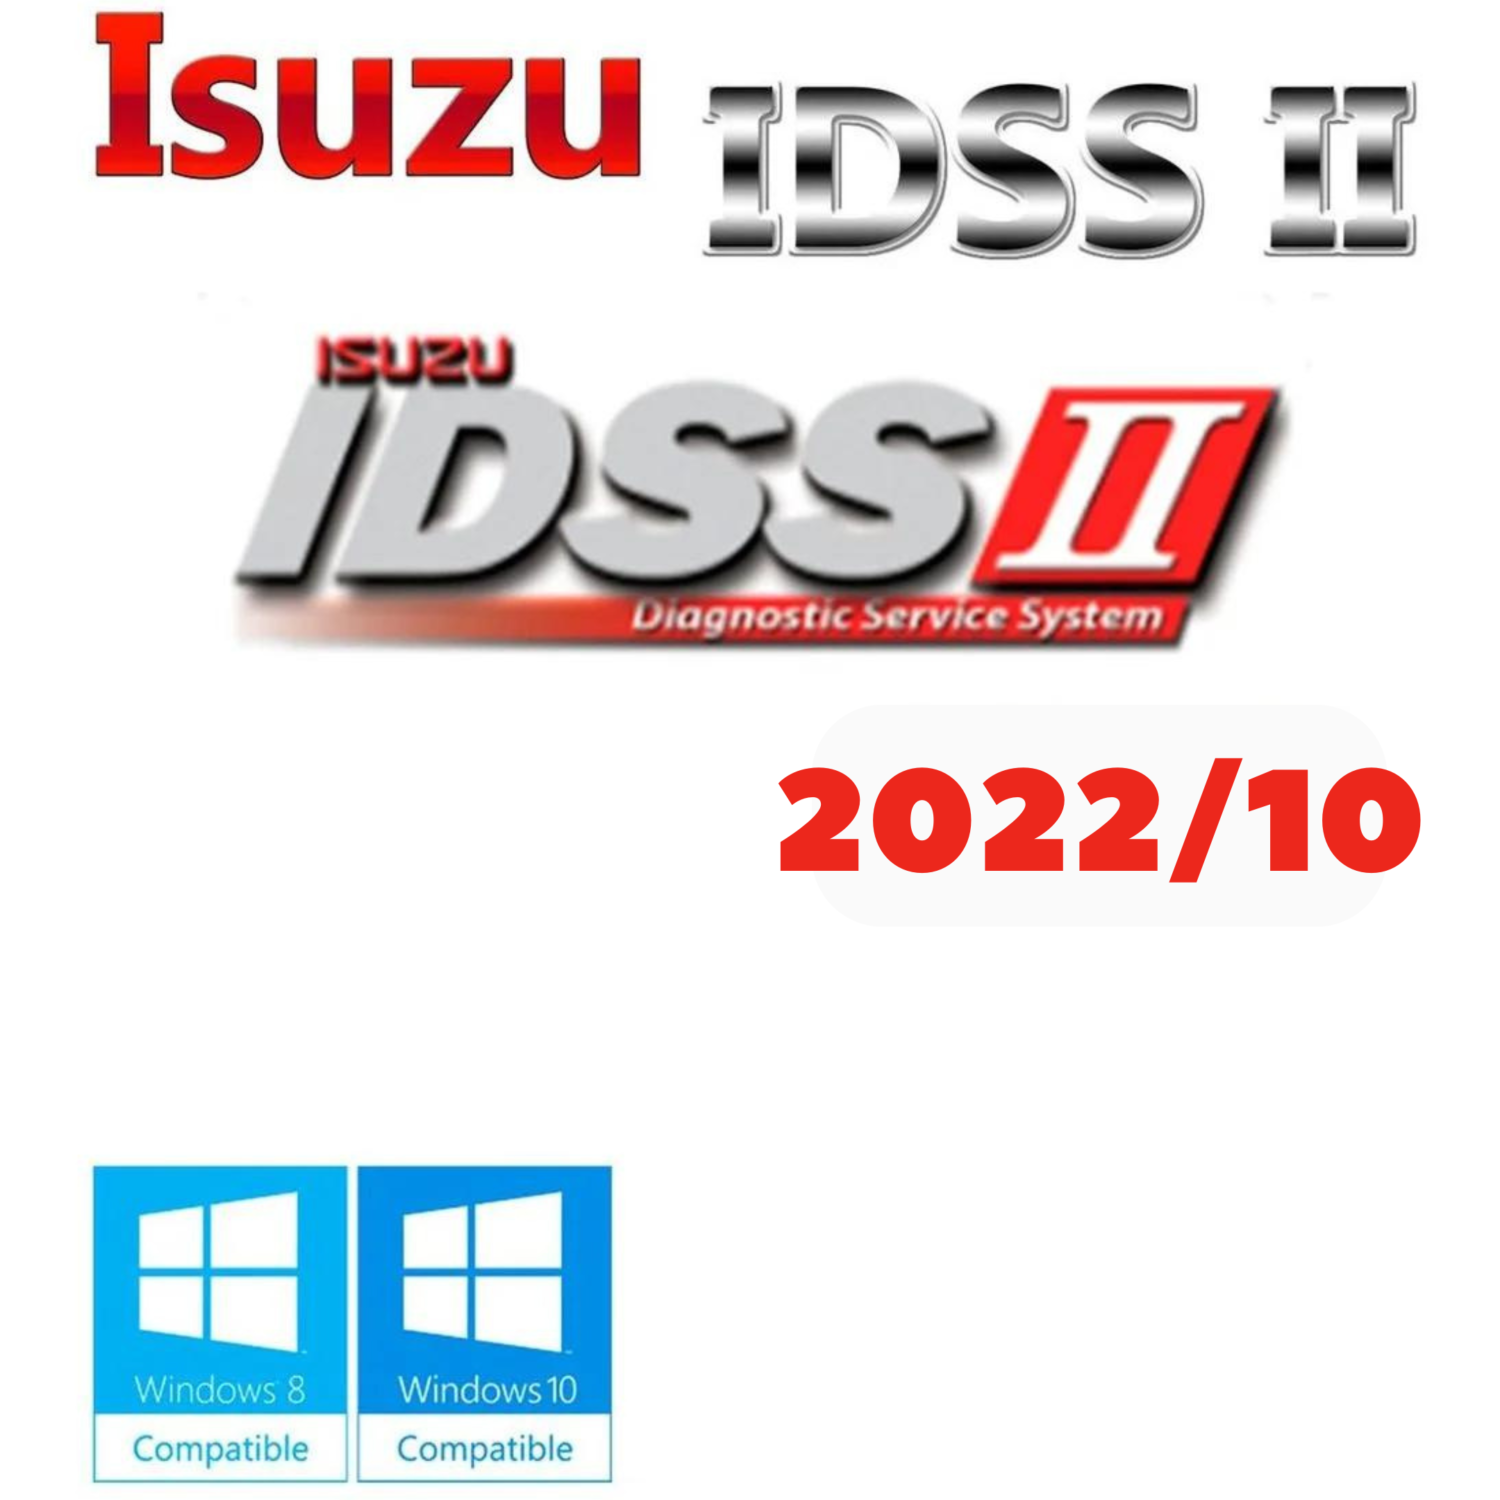 isuzu us idss ii 2022/12 diagnostic service system for nexiq usb link